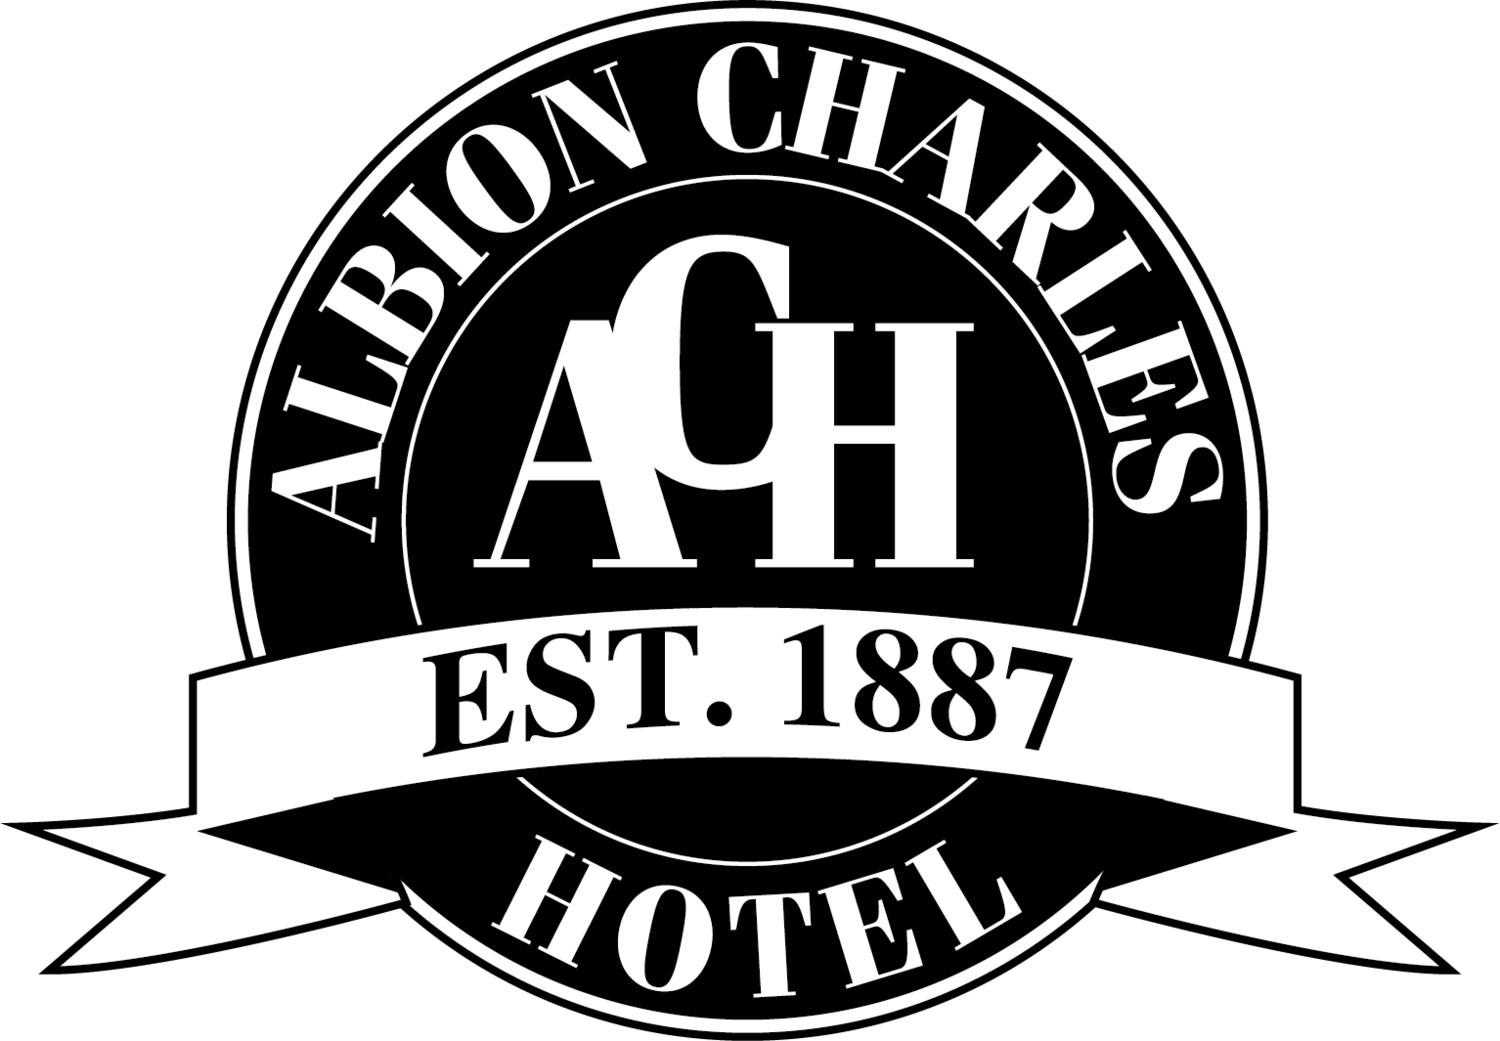 Albion Charles Hotel, Northcote, VIC